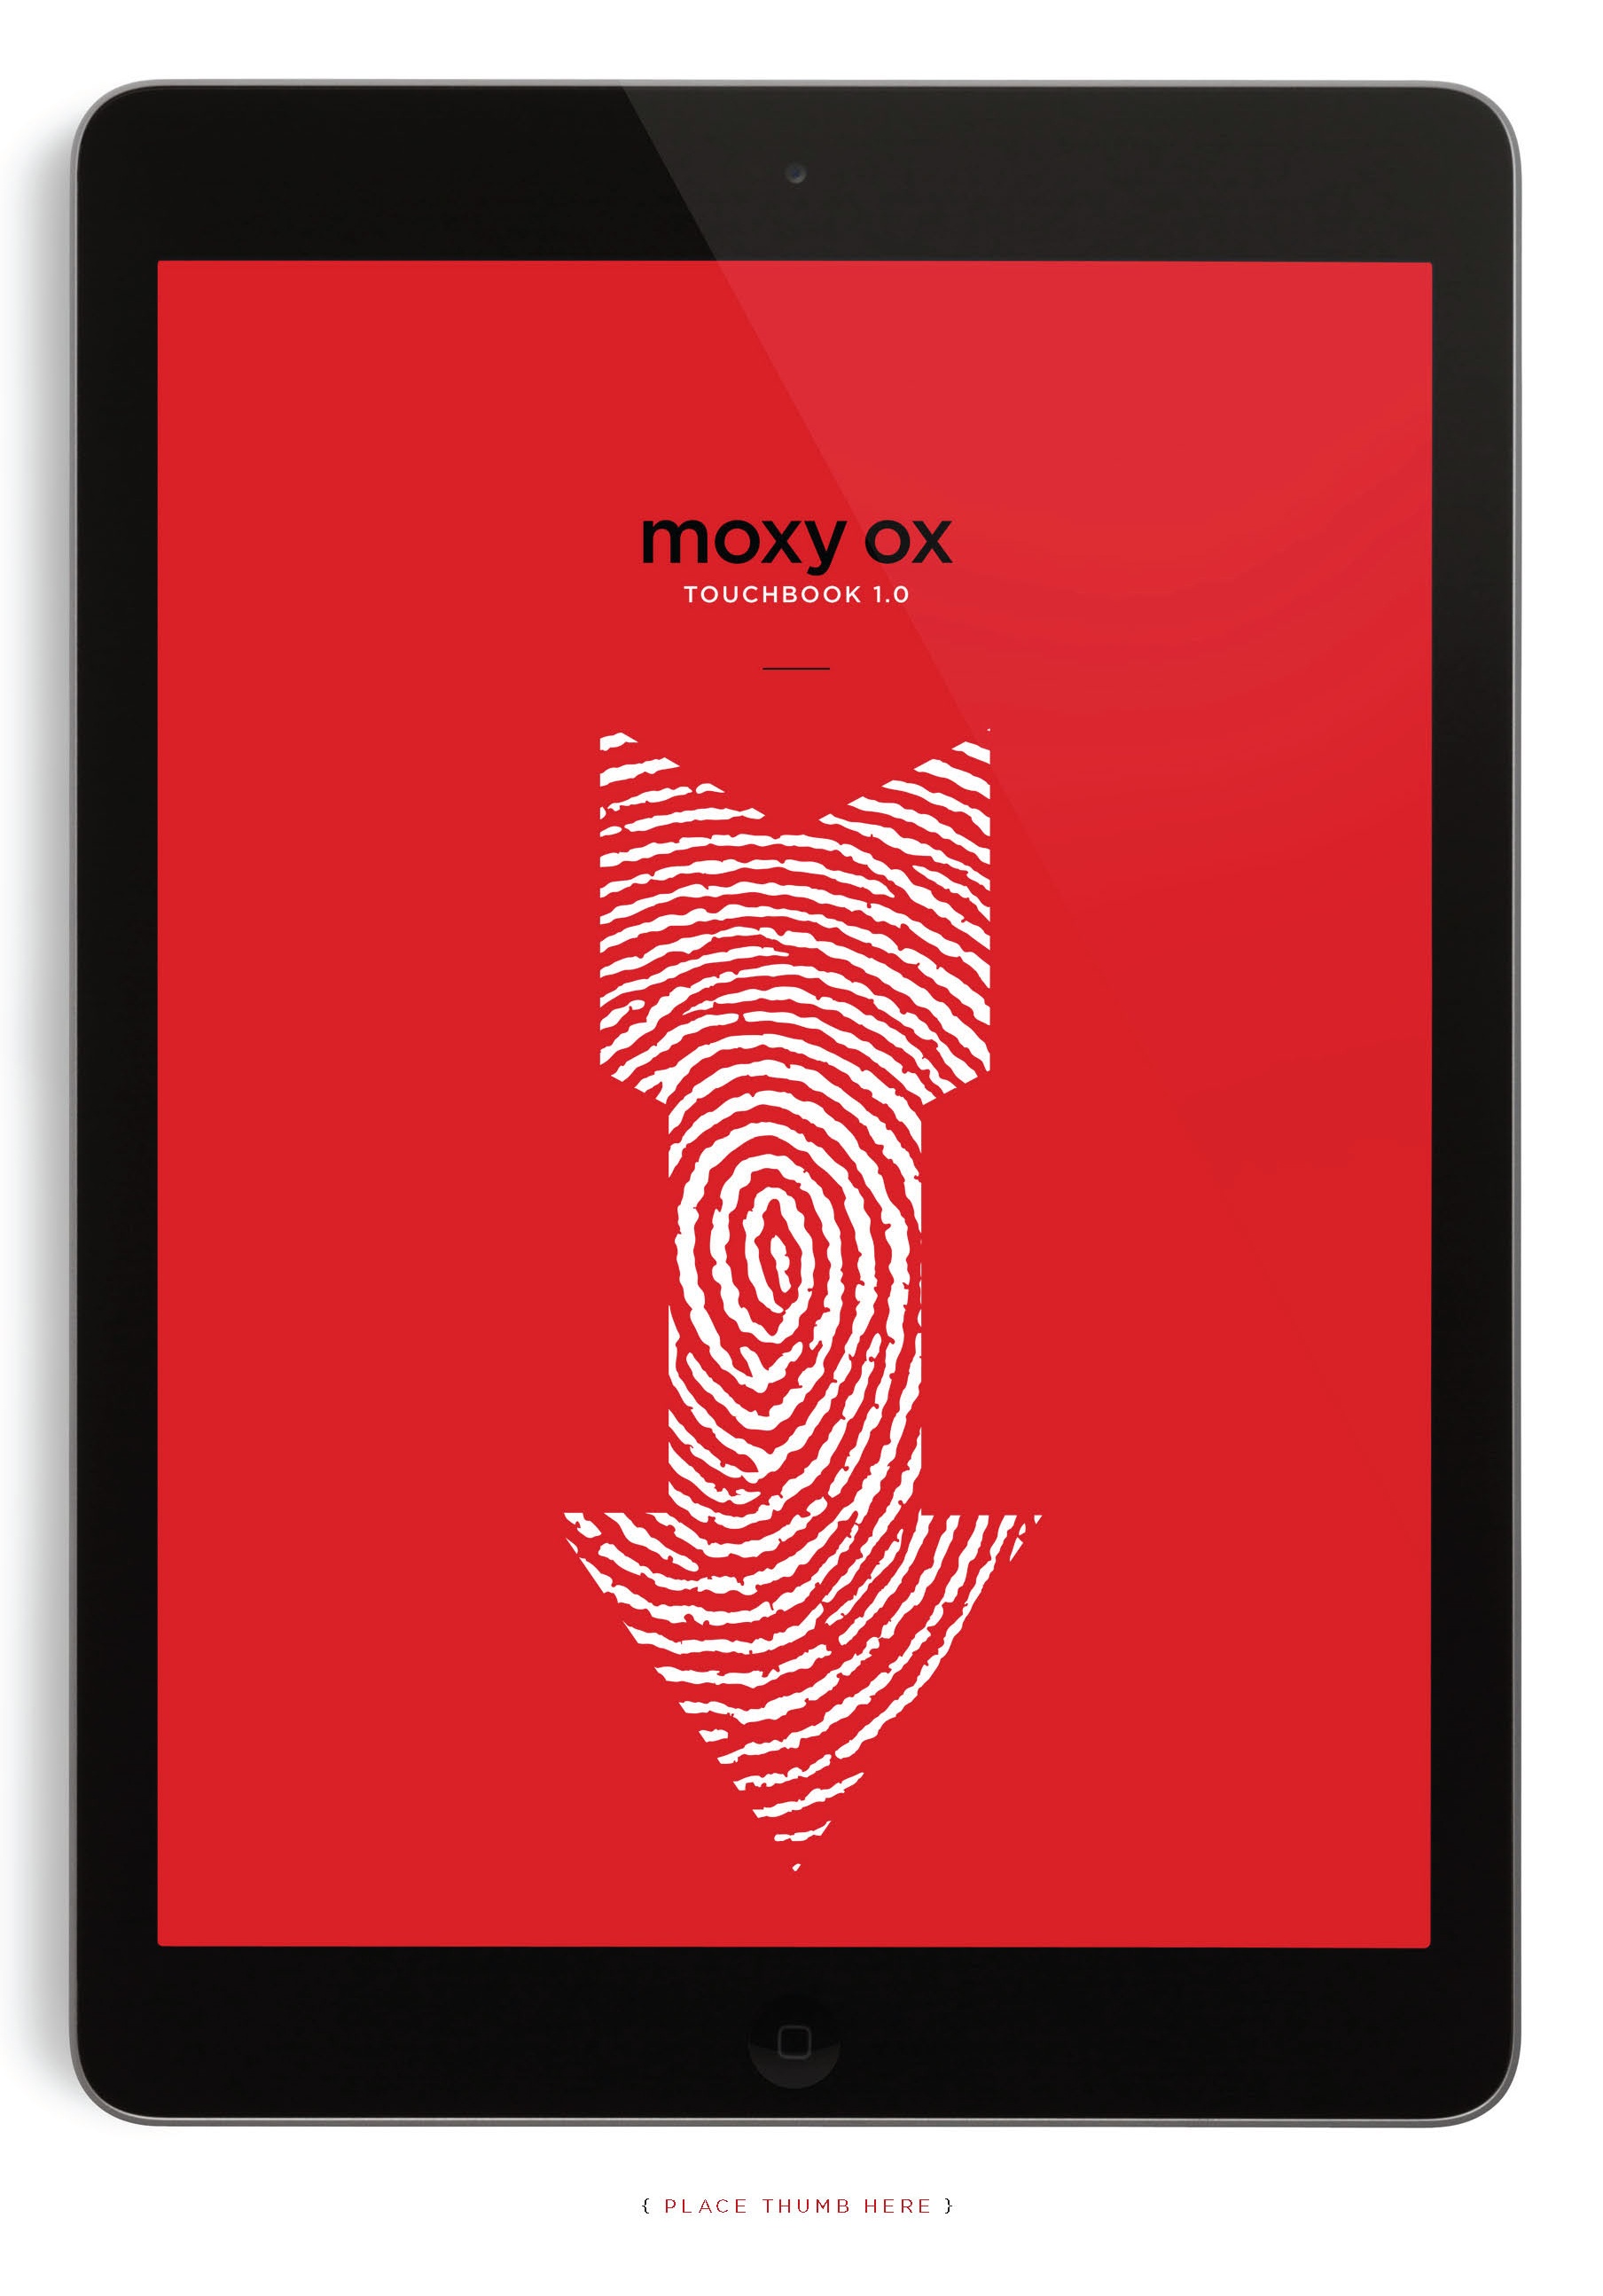   Moxy Ox Digital Printing   AGENCY: SWAY  CREATIVE DIRECTOR/WRITER: Bill Corley  DESIGN: Jeff Savage 